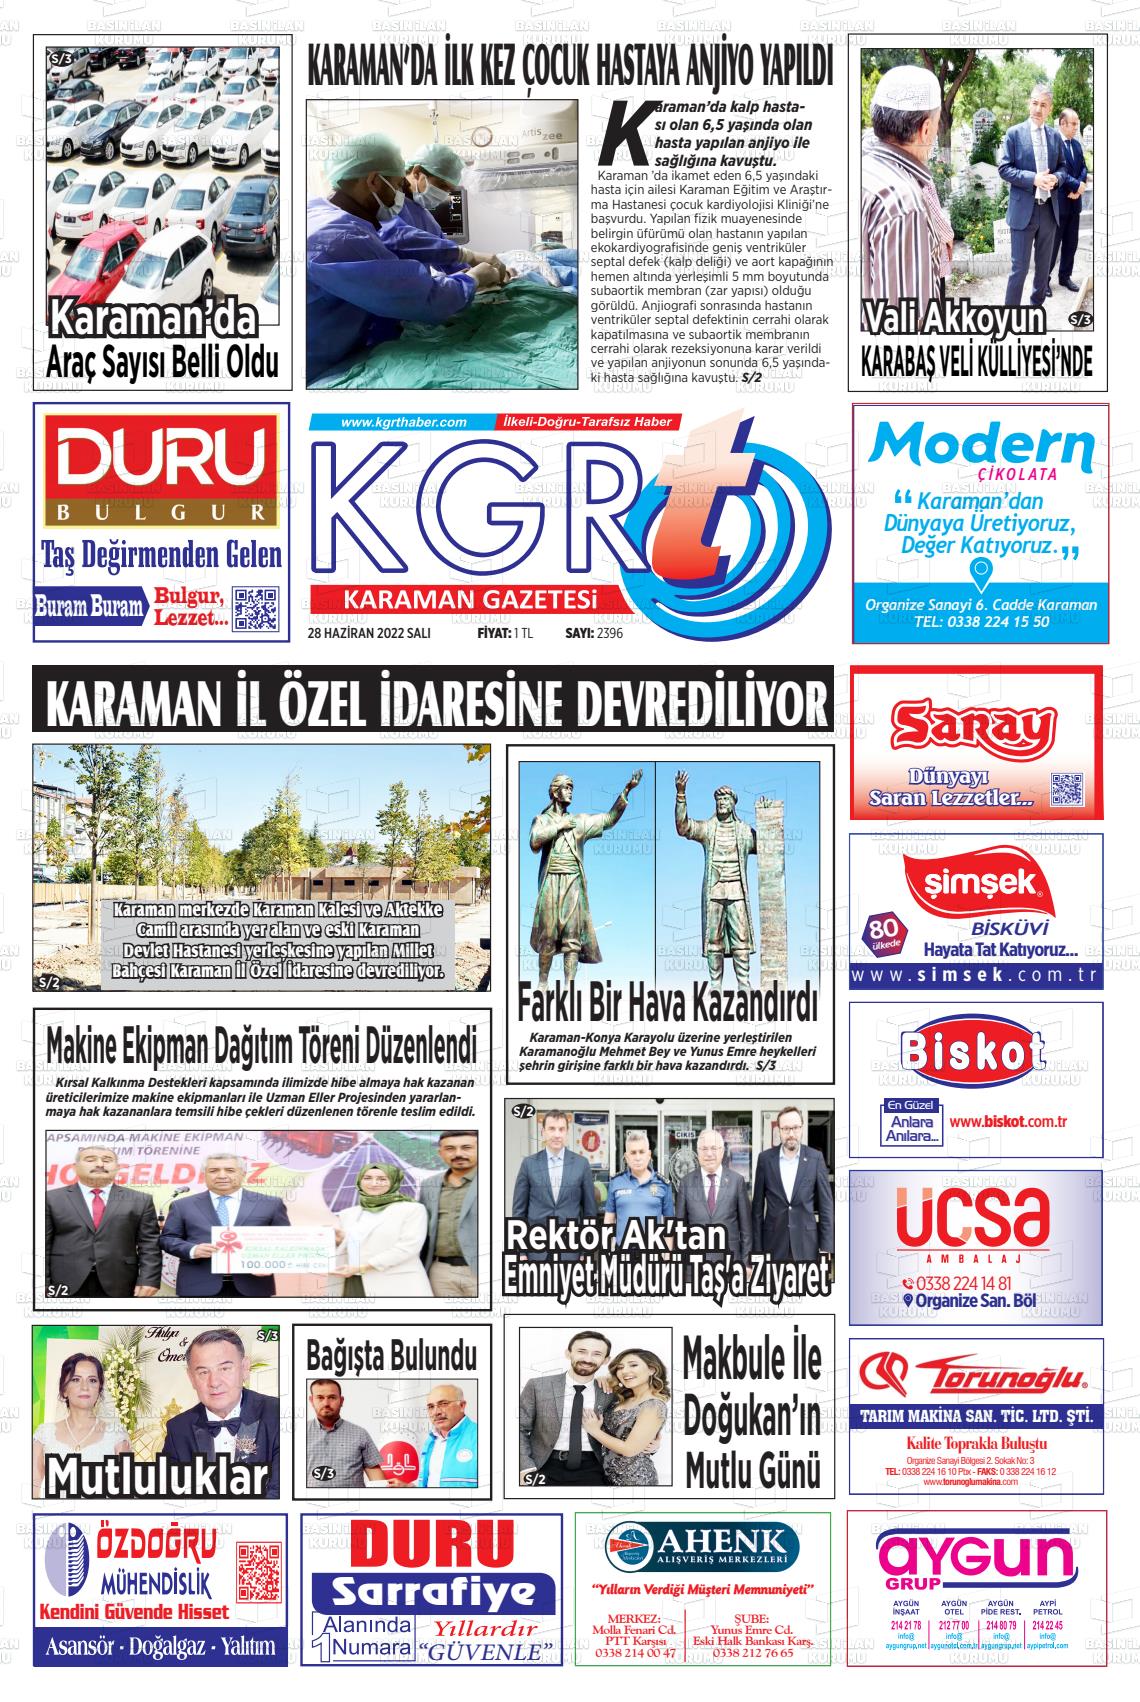 28 Haziran 2022 Kgrt Karaman Gazete Manşeti